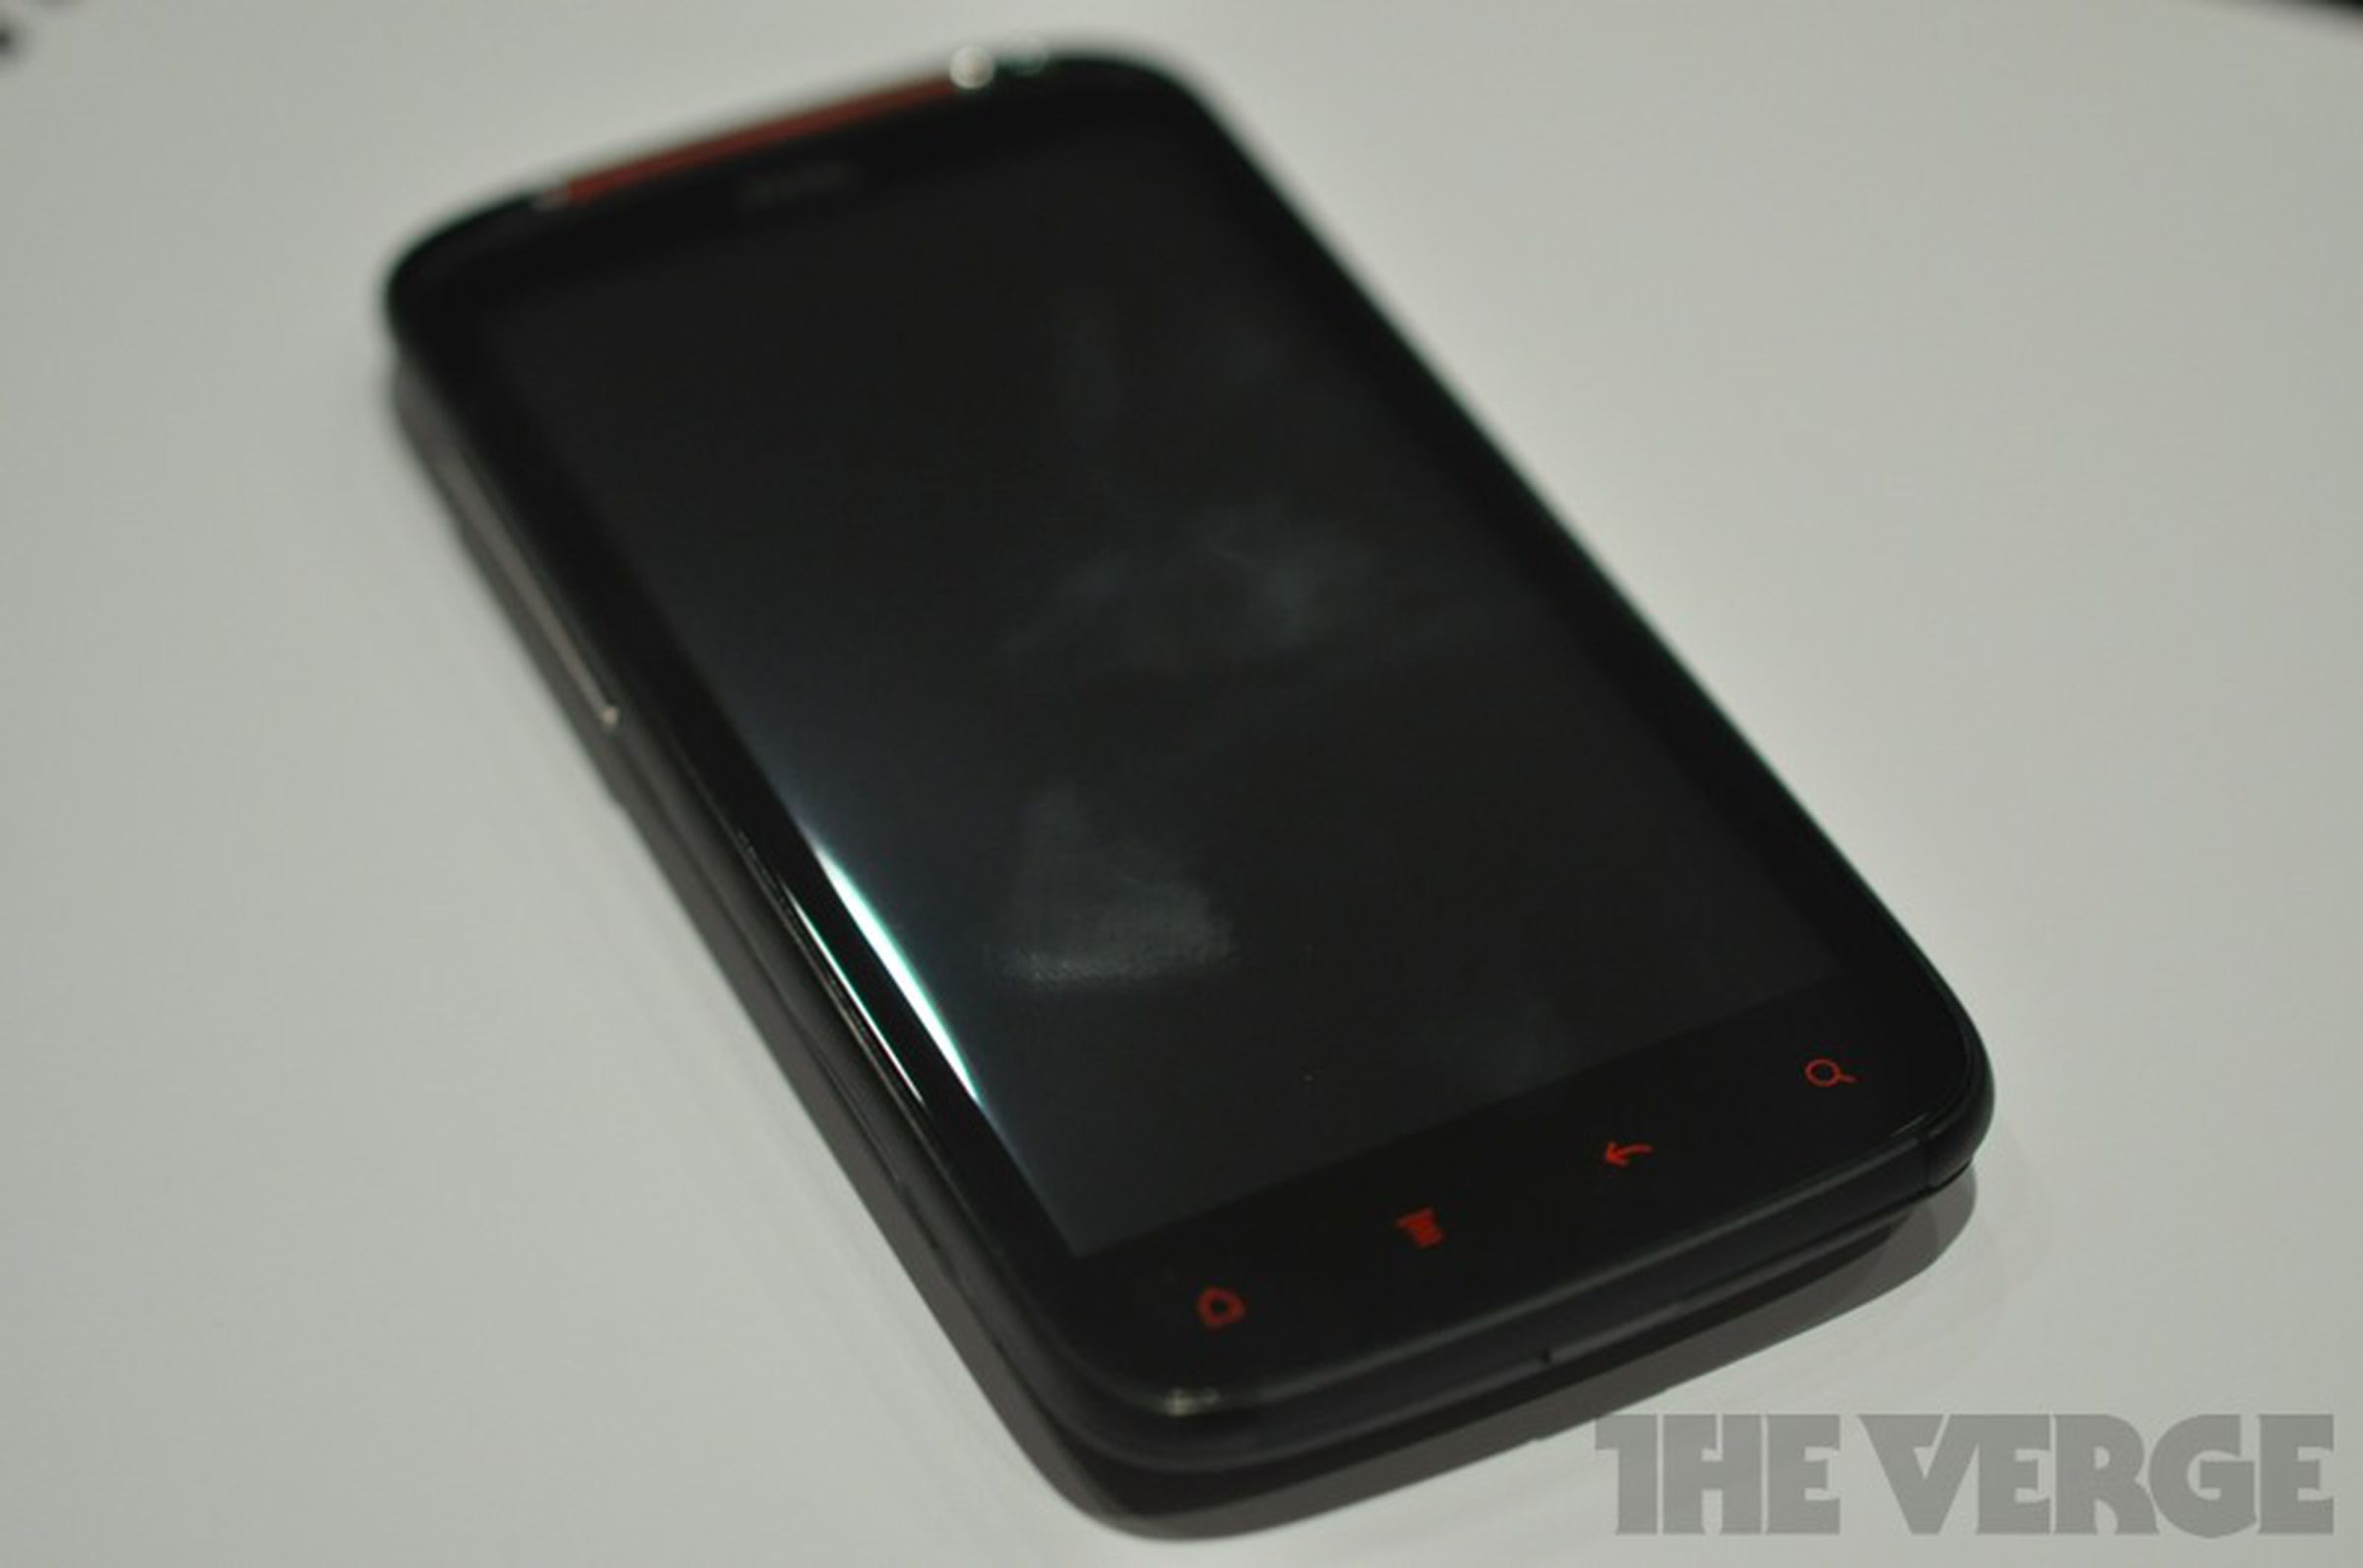 HTC Sensation XE hands on photos